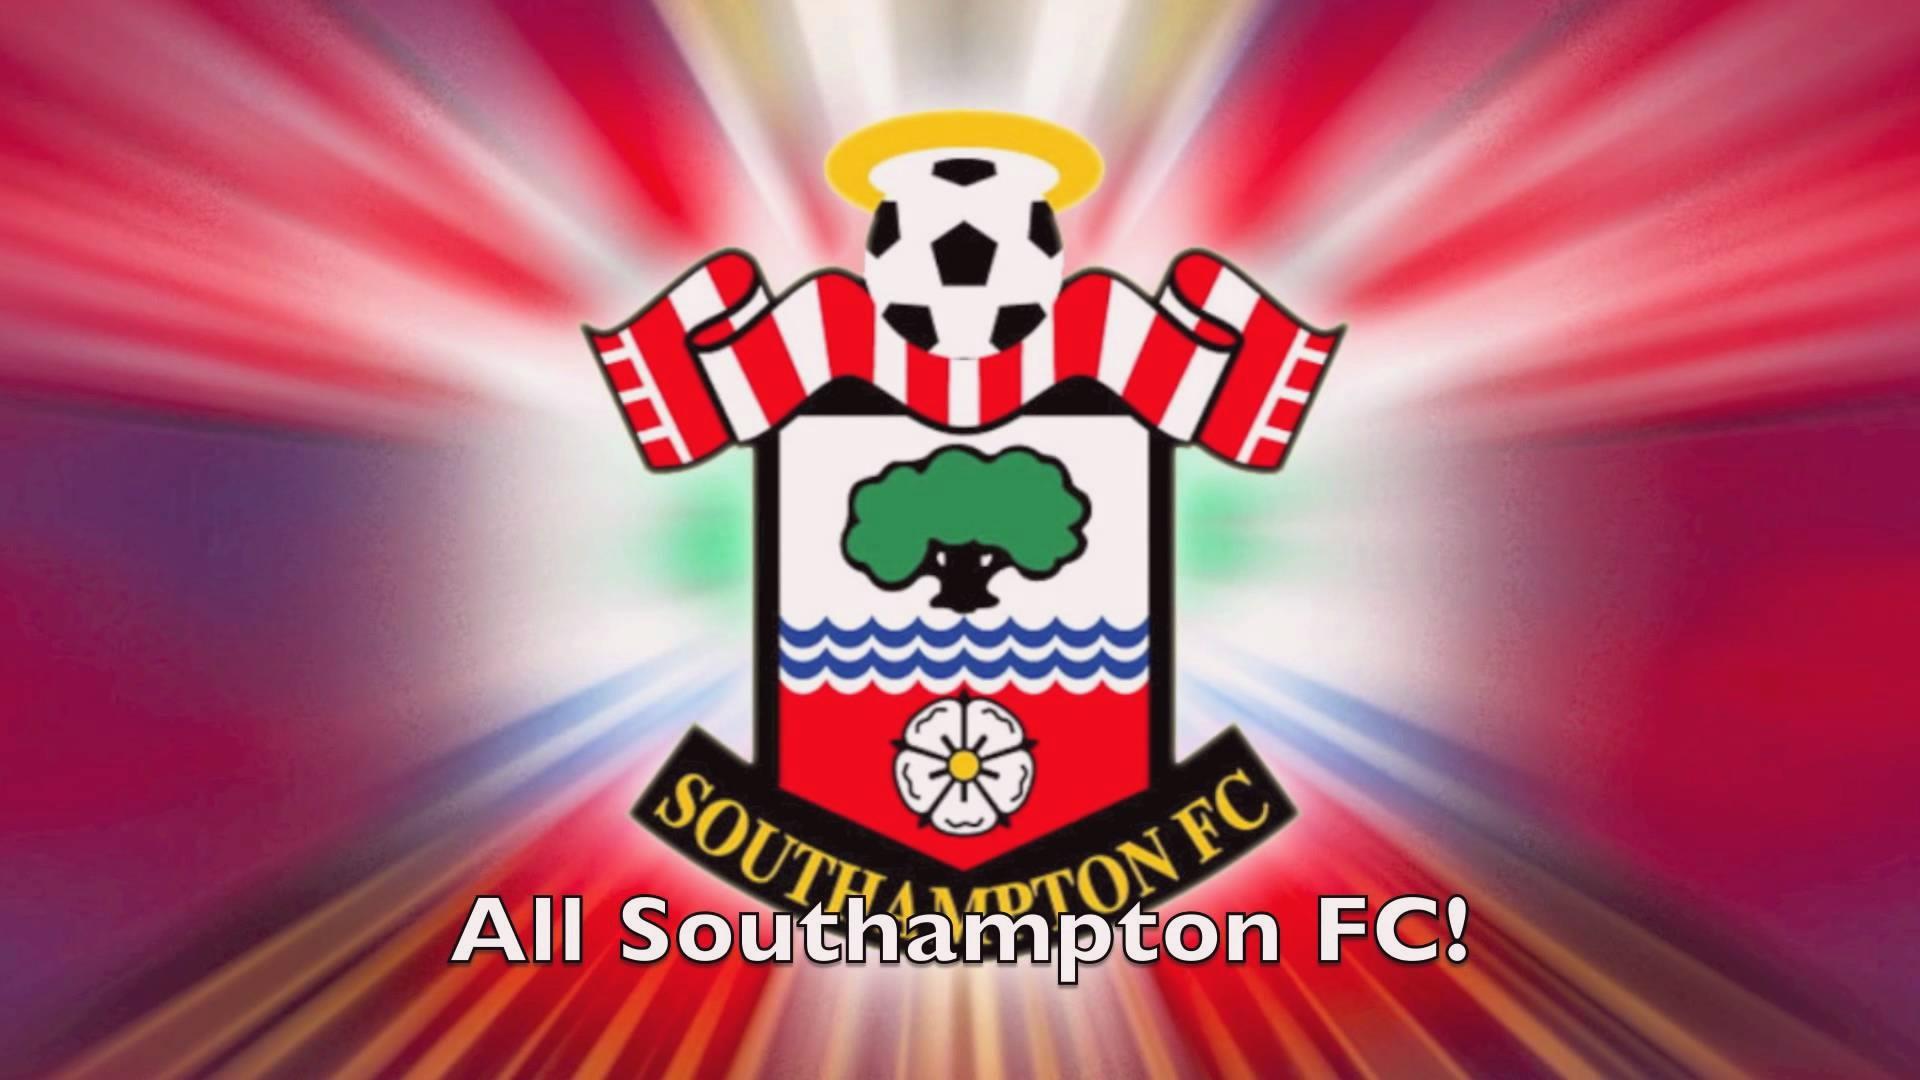 Southampton FC at 1024 x 1024 iPad size wallpapers HD quality